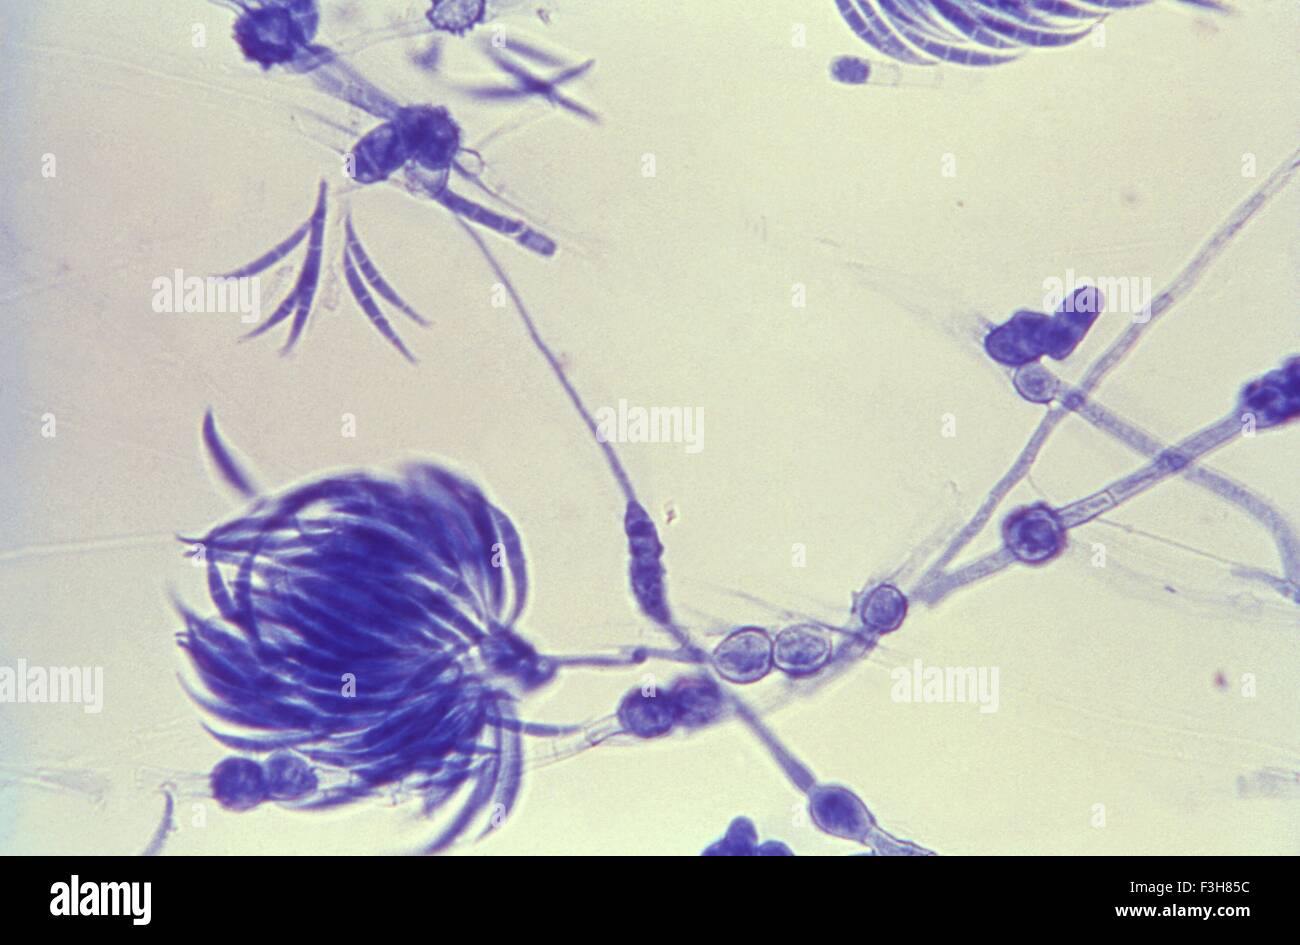 Lactophenol cotton blue-stained Fusarium fungal organism Stock Photo